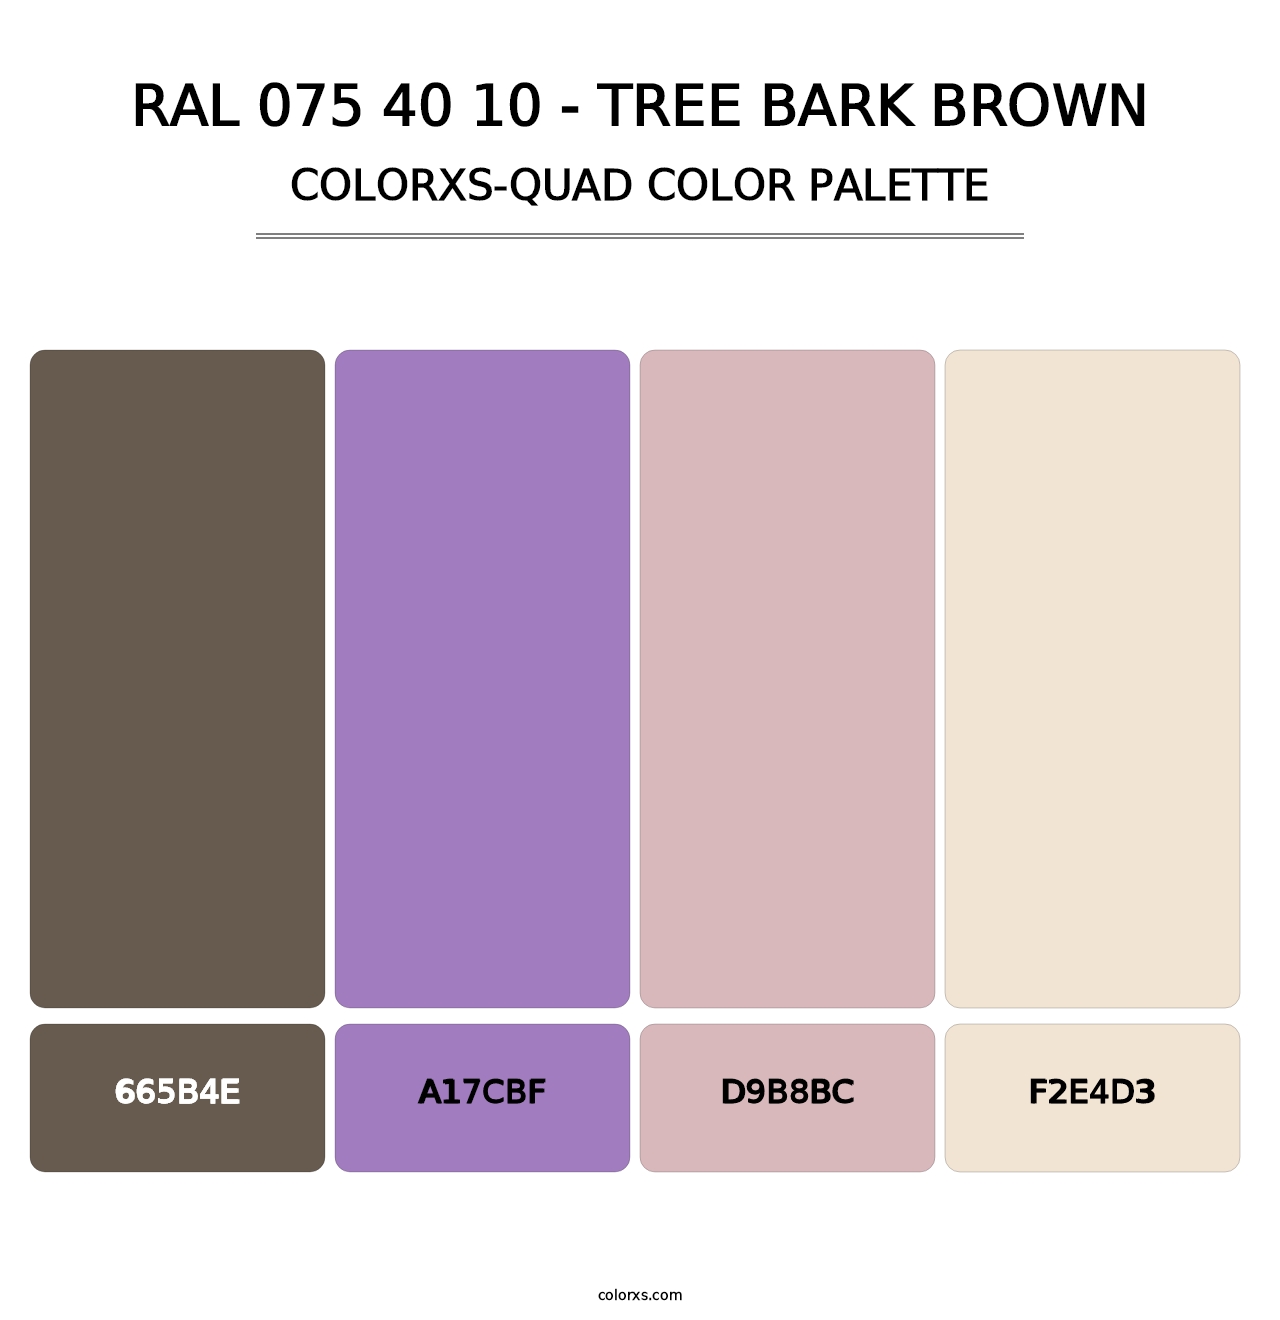 RAL 075 40 10 - Tree Bark Brown - Colorxs Quad Palette